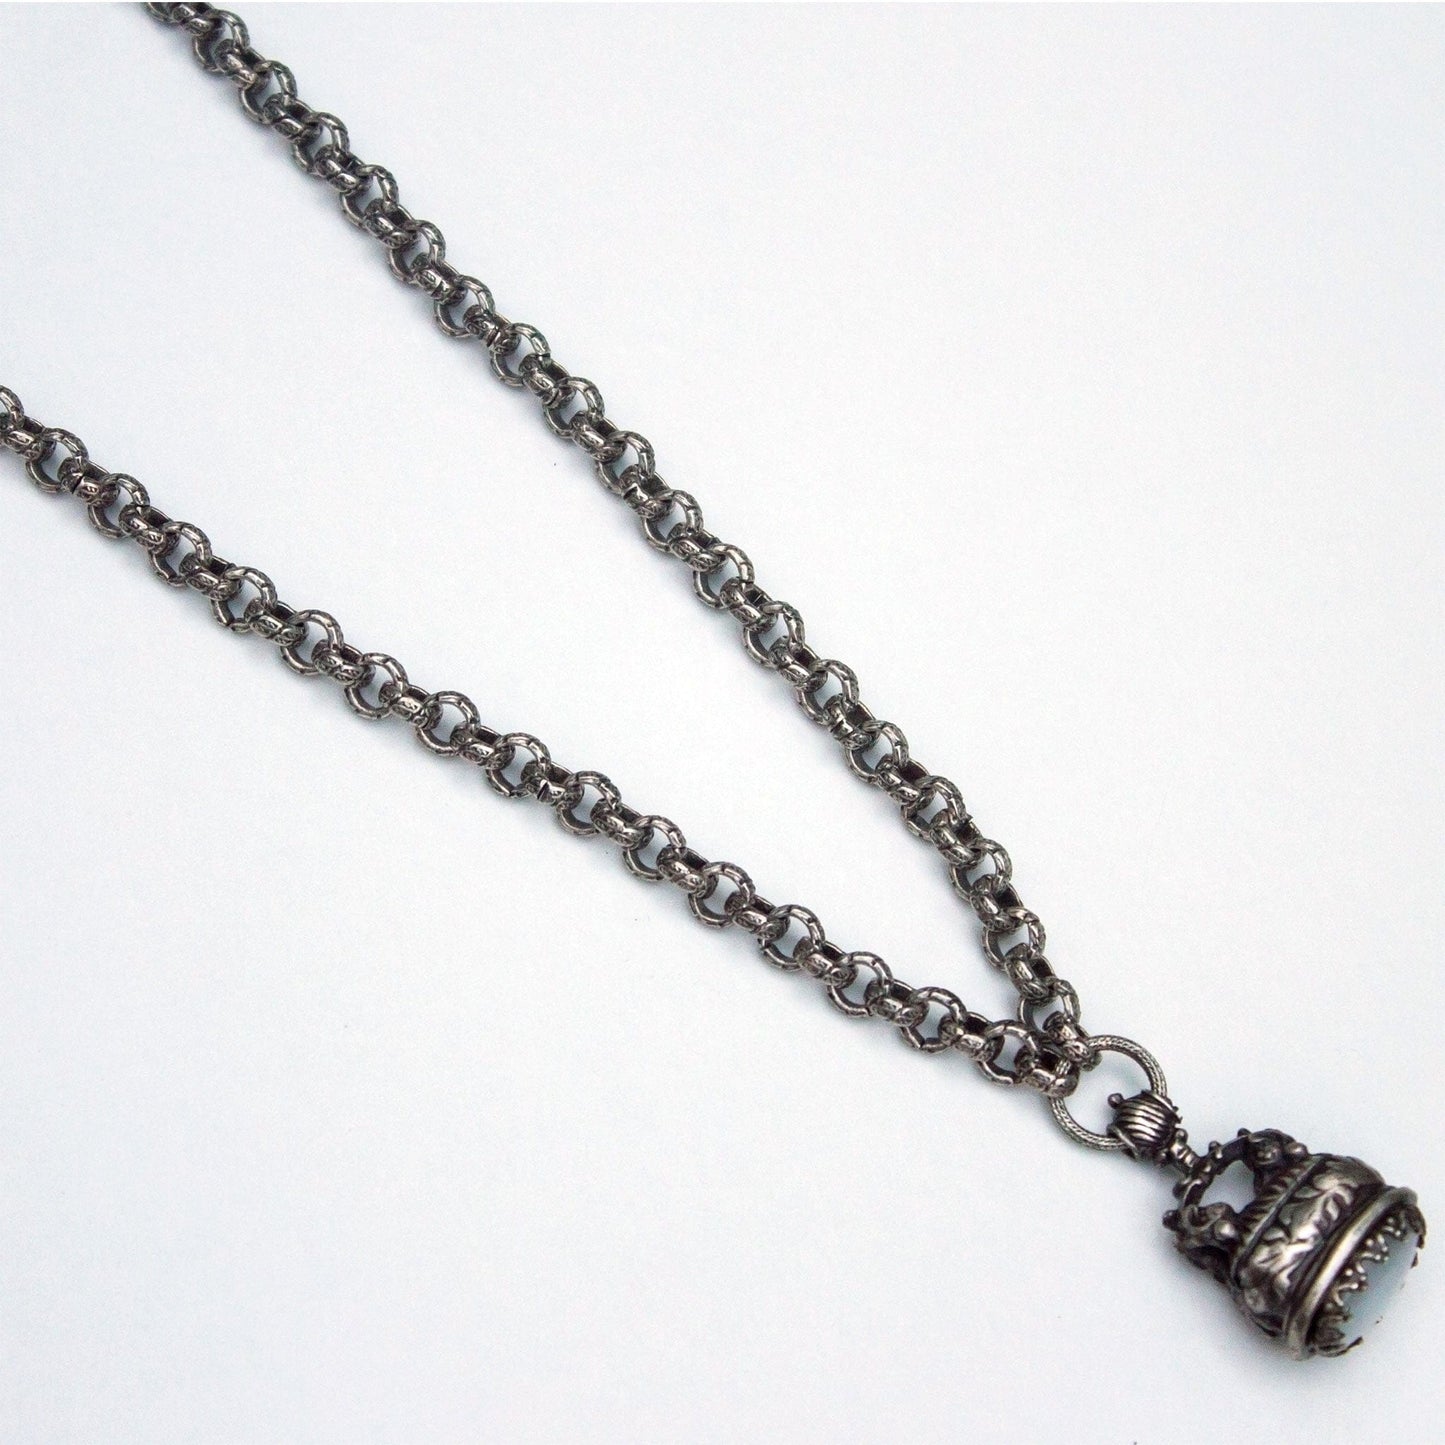 Silvertone Emblem Necklace Jewelry